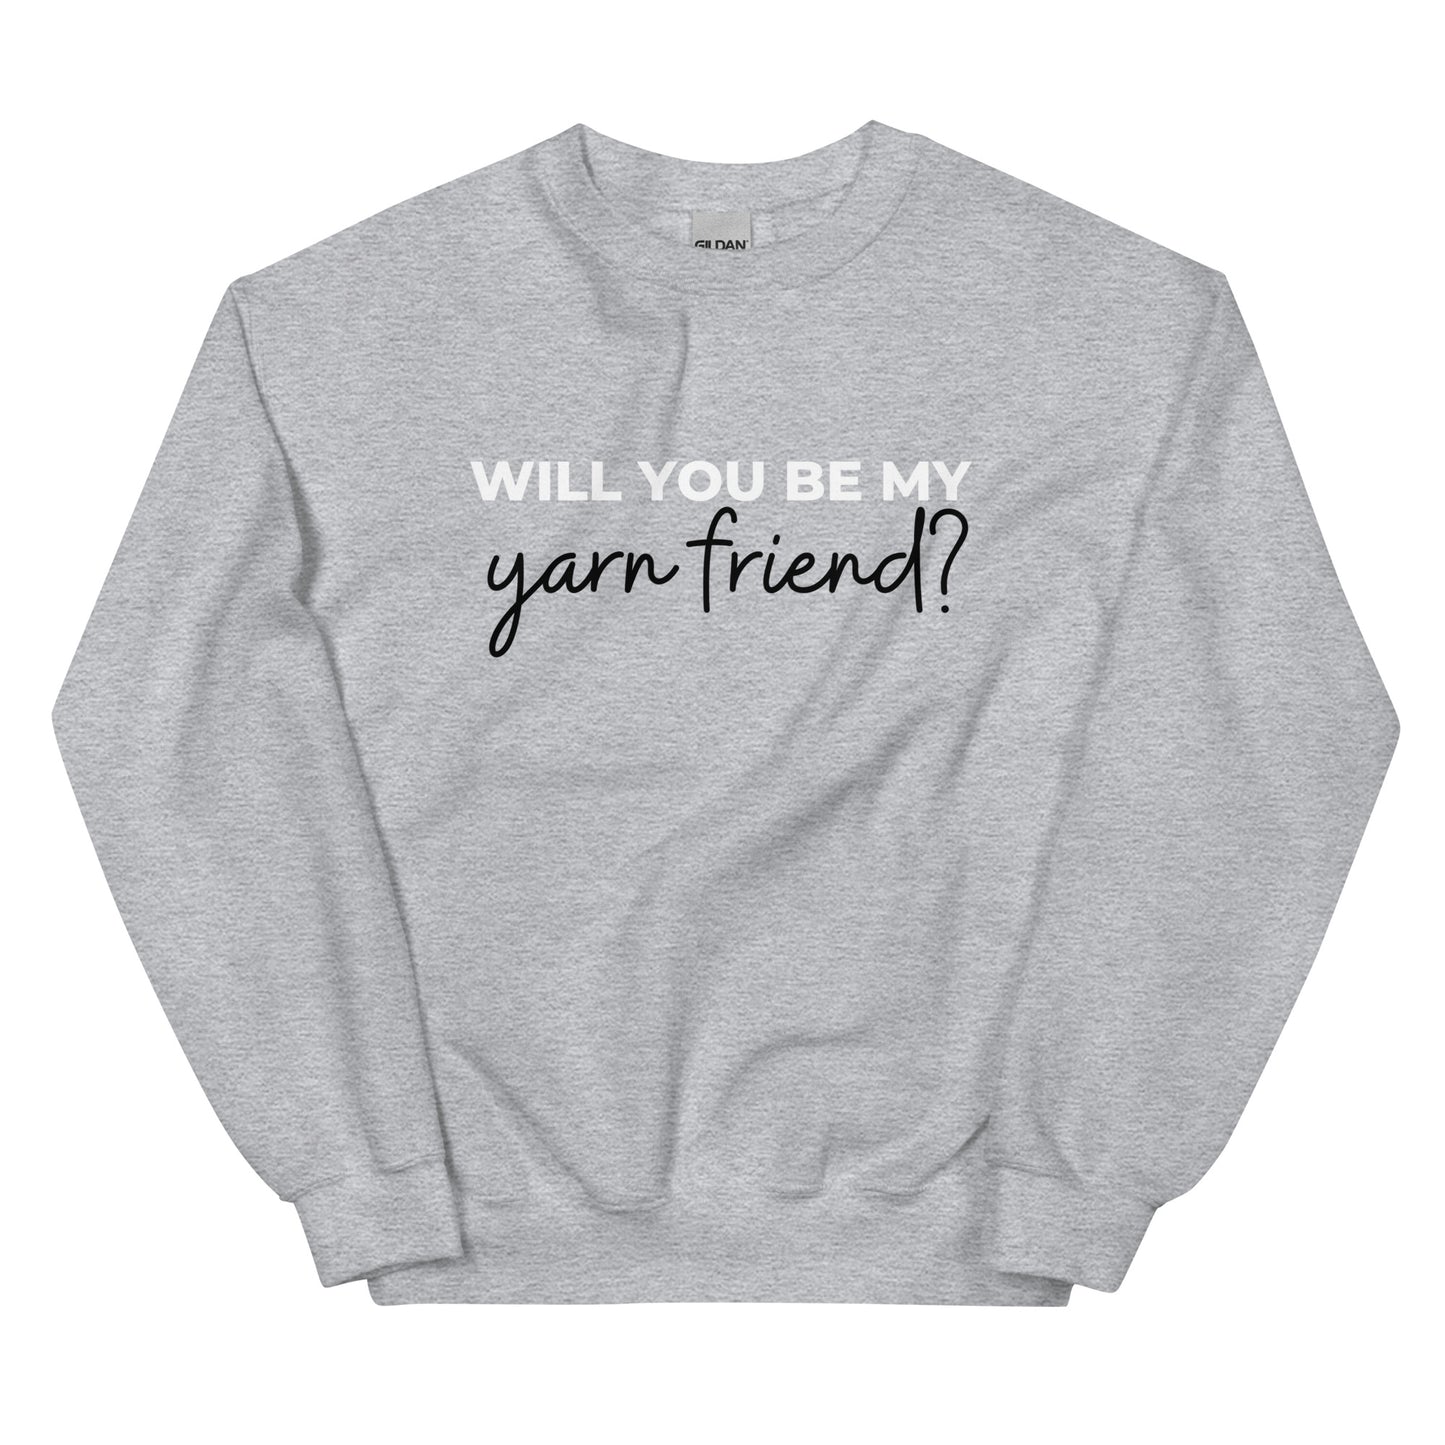 BE MY YARN FRIEND | Crewneck Sweater in Sport Grey